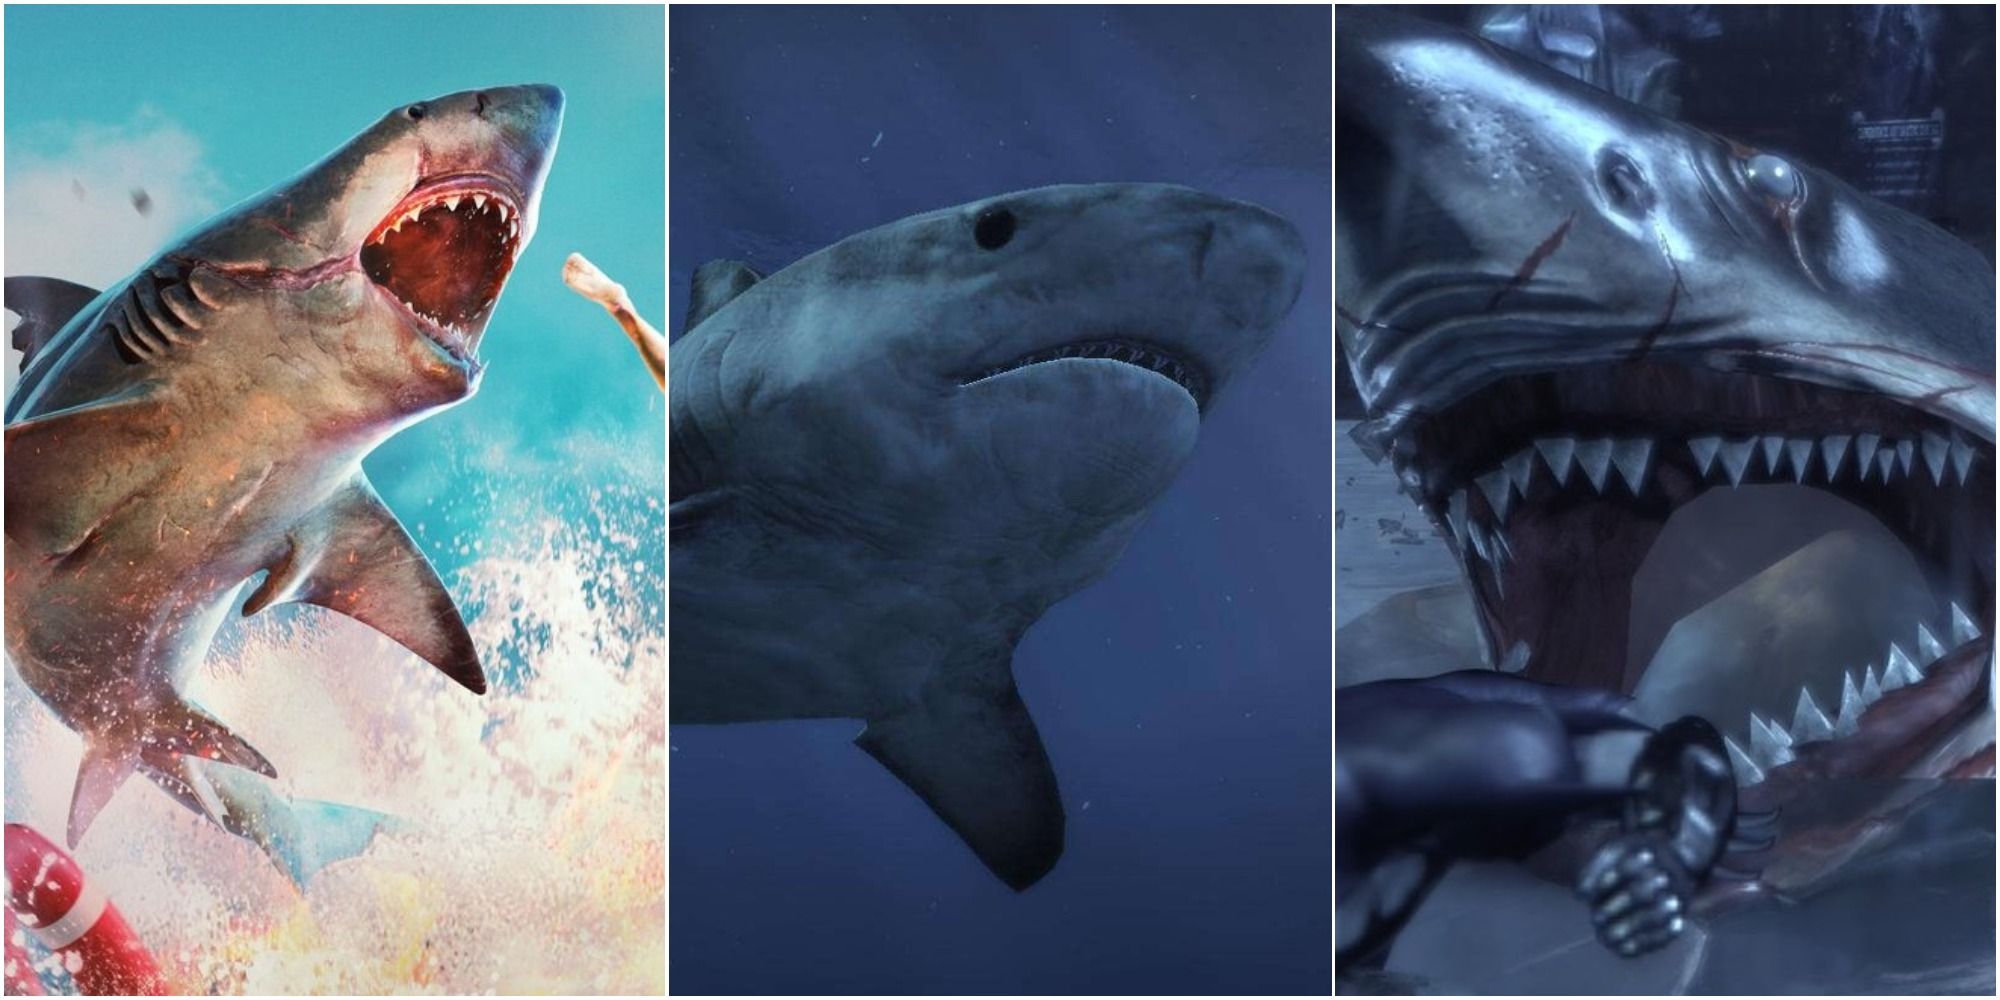 Top 10 Sharks in Video Games